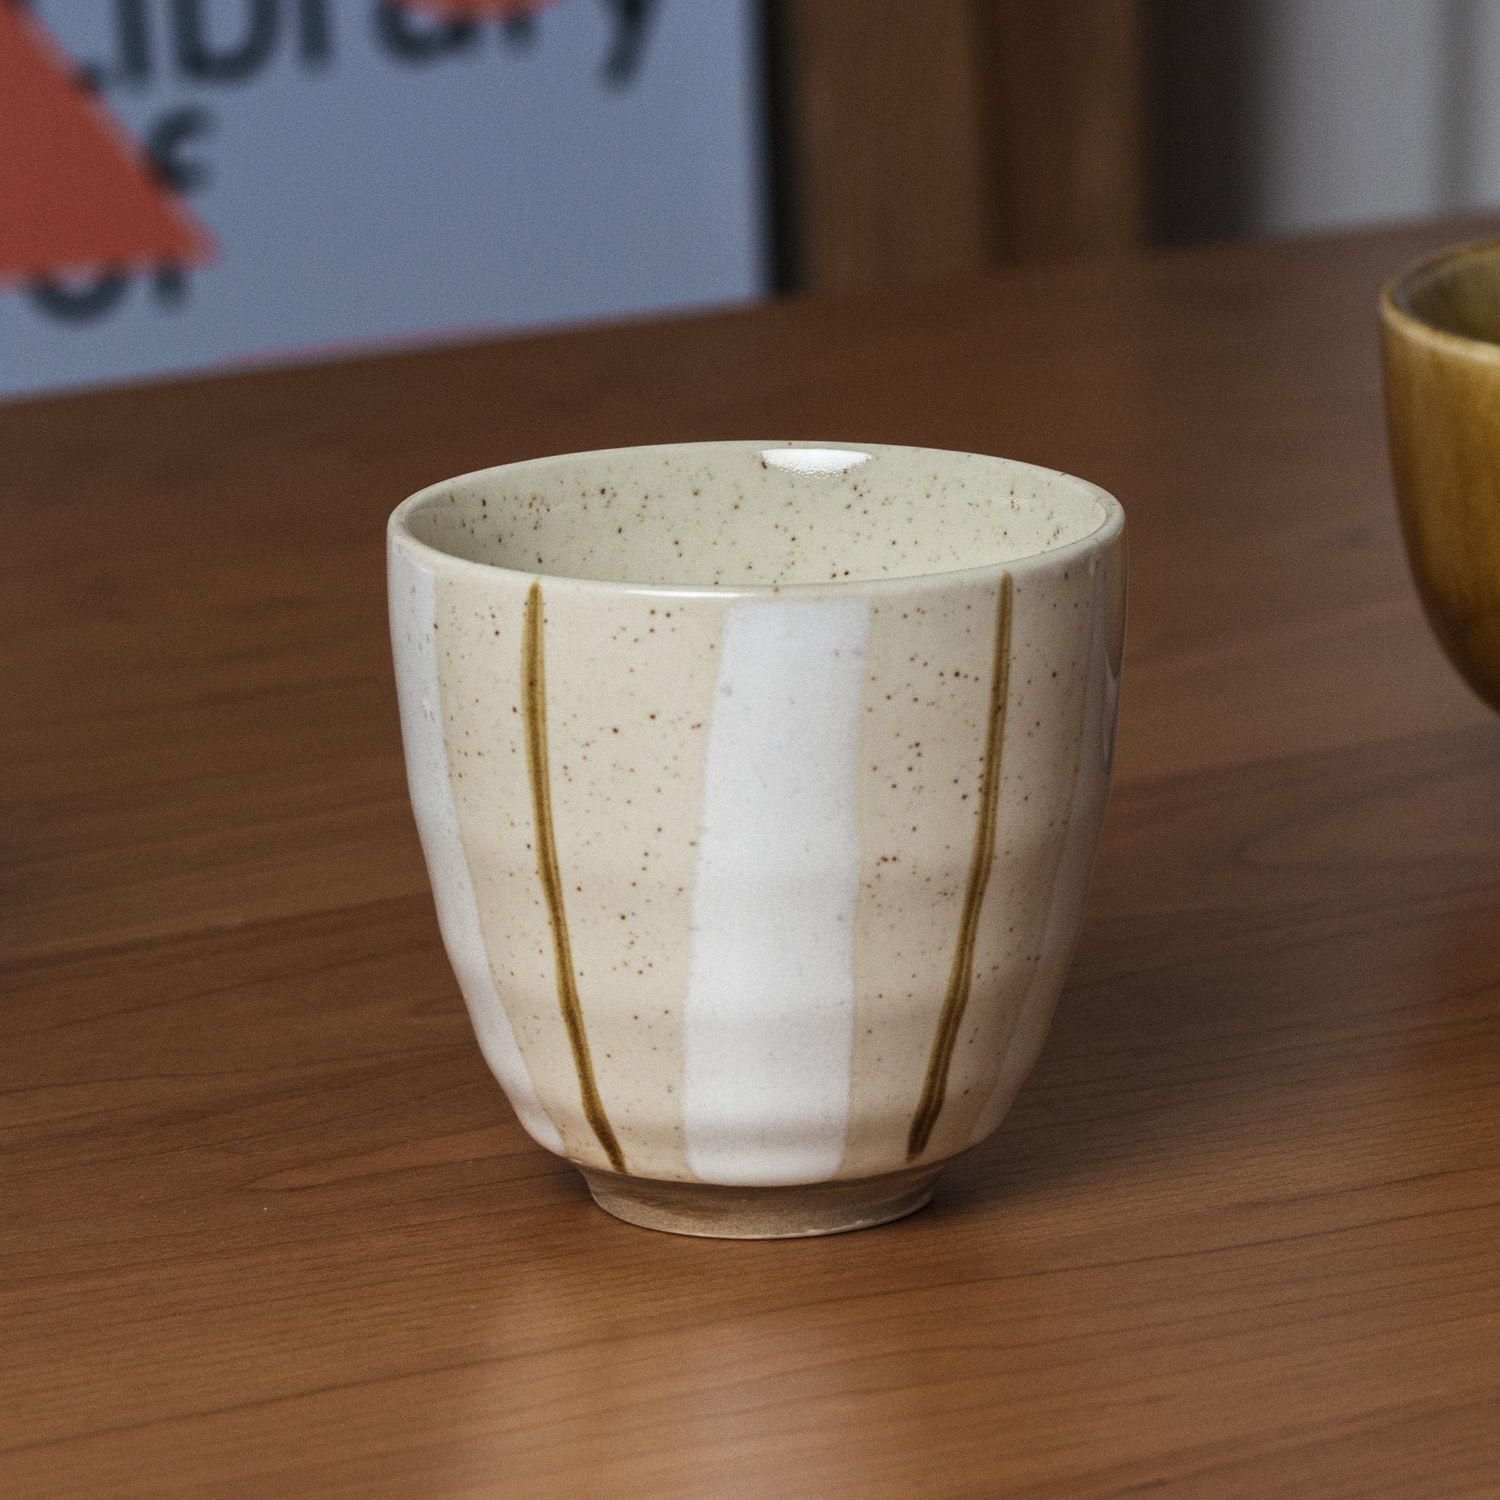 tatanara 日式茶杯复古手绘条纹米黄色 陶瓷汤吞无把手握水杯子